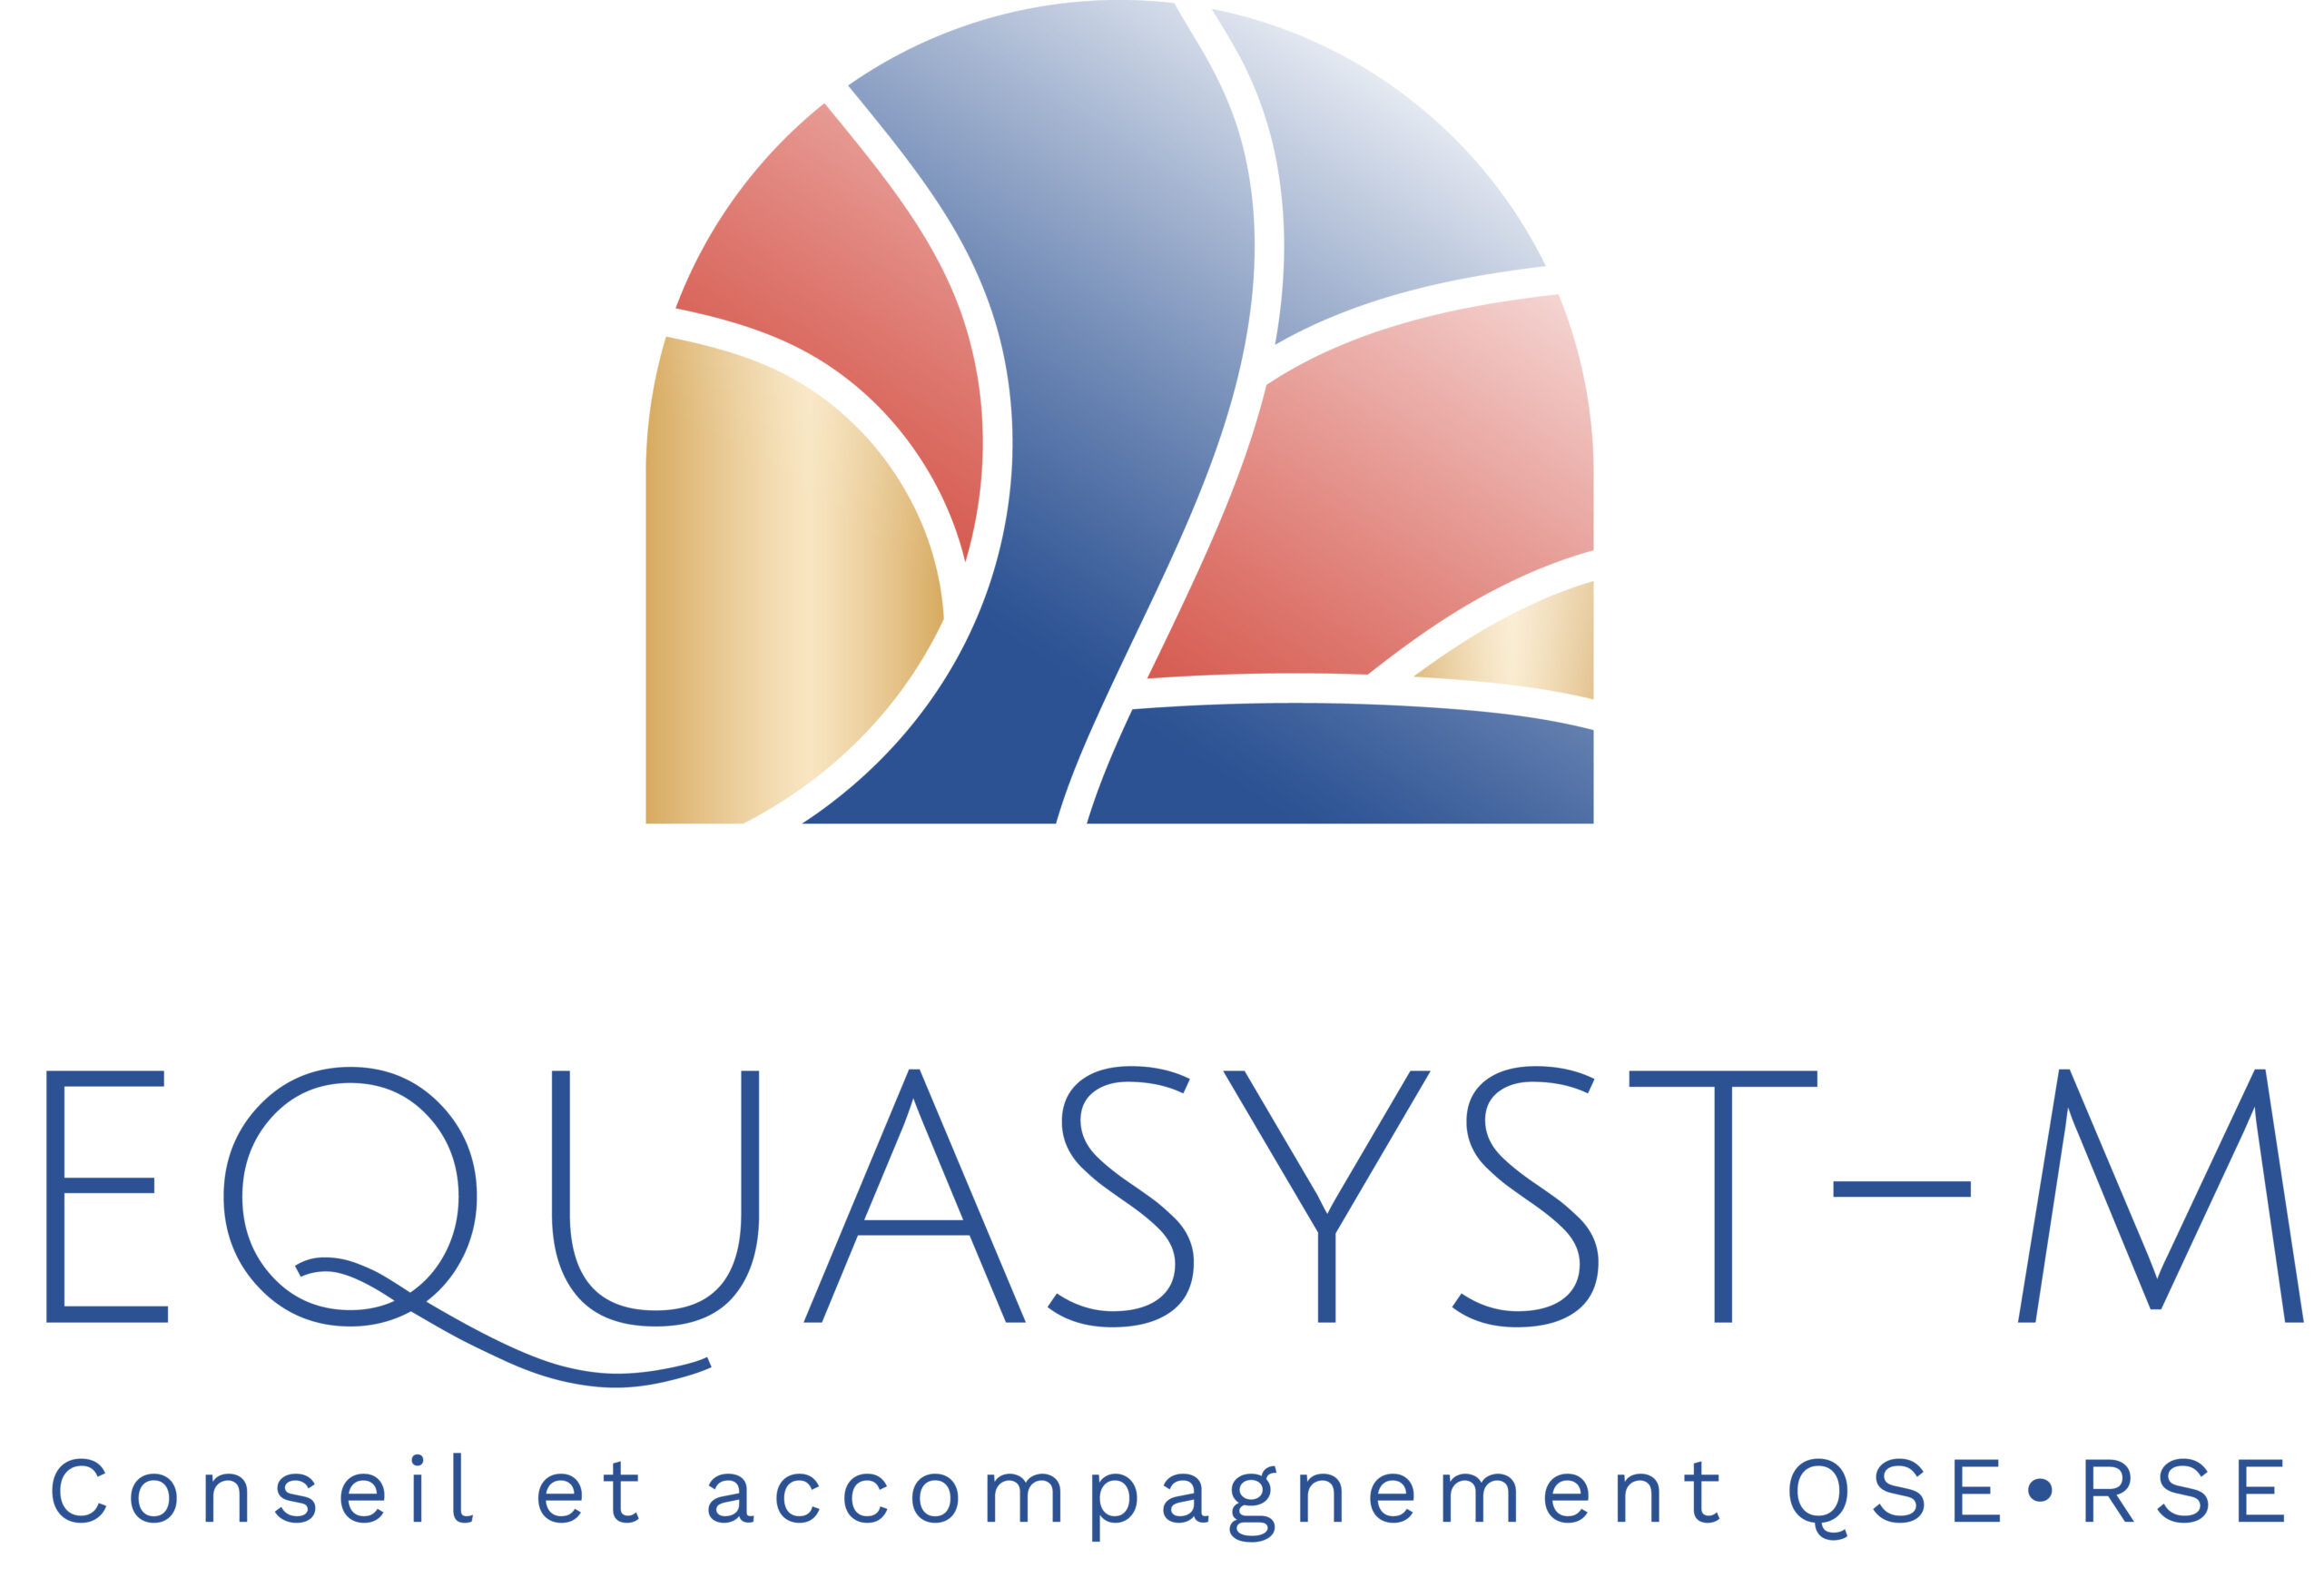 Equasyst-M_Logo